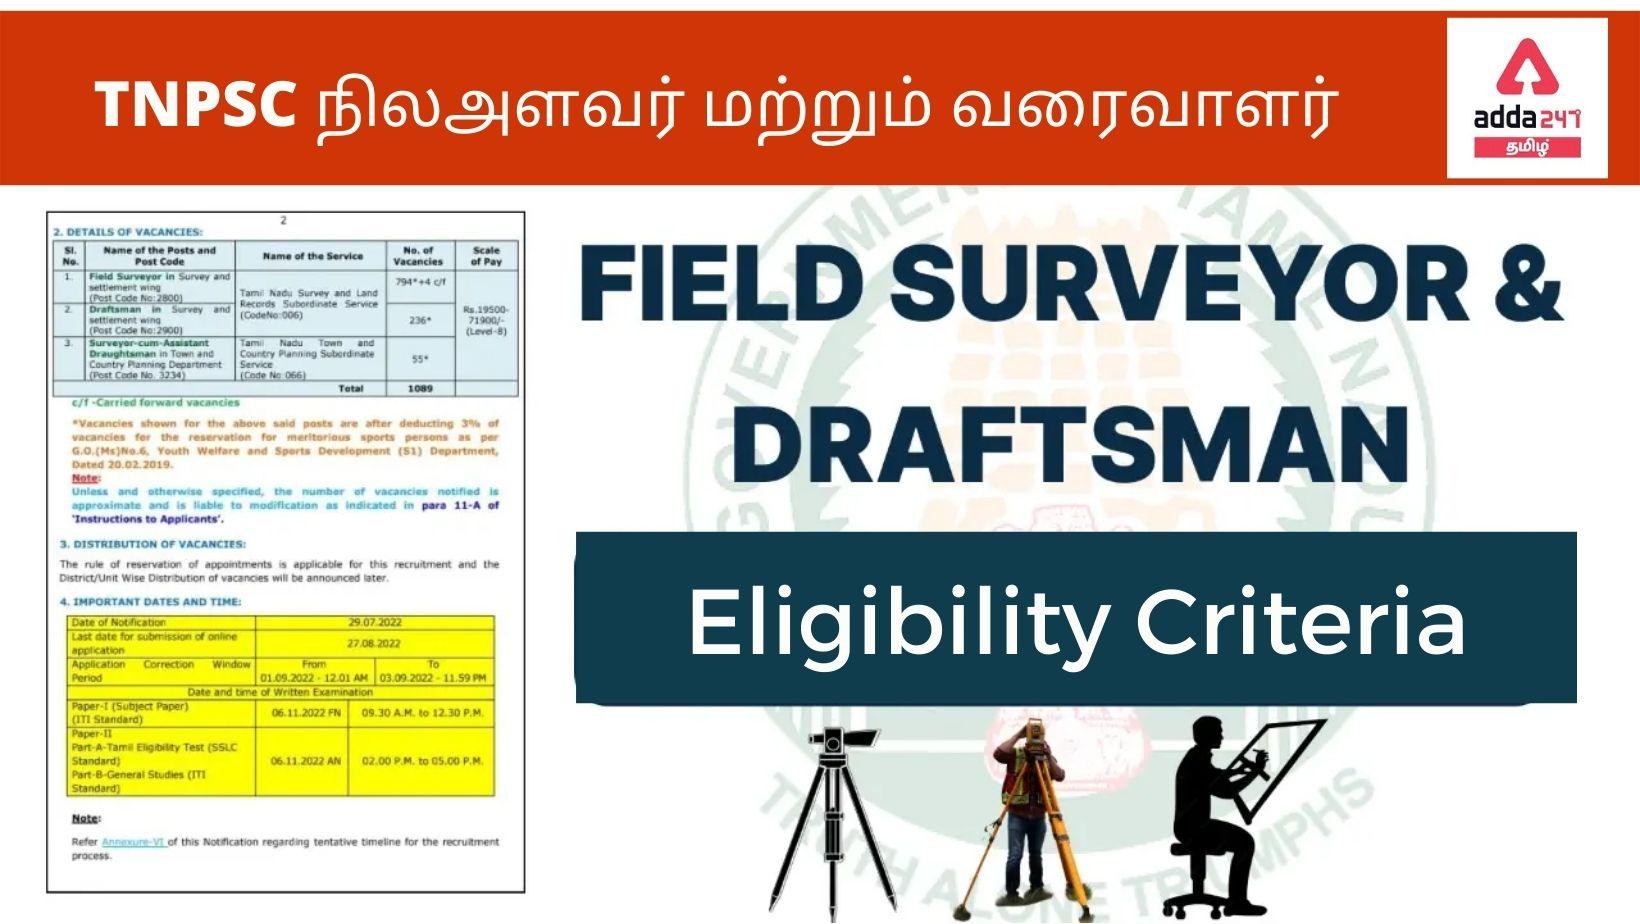 TNPSC Field Surveyor and Draftsman Eligibility Criteria